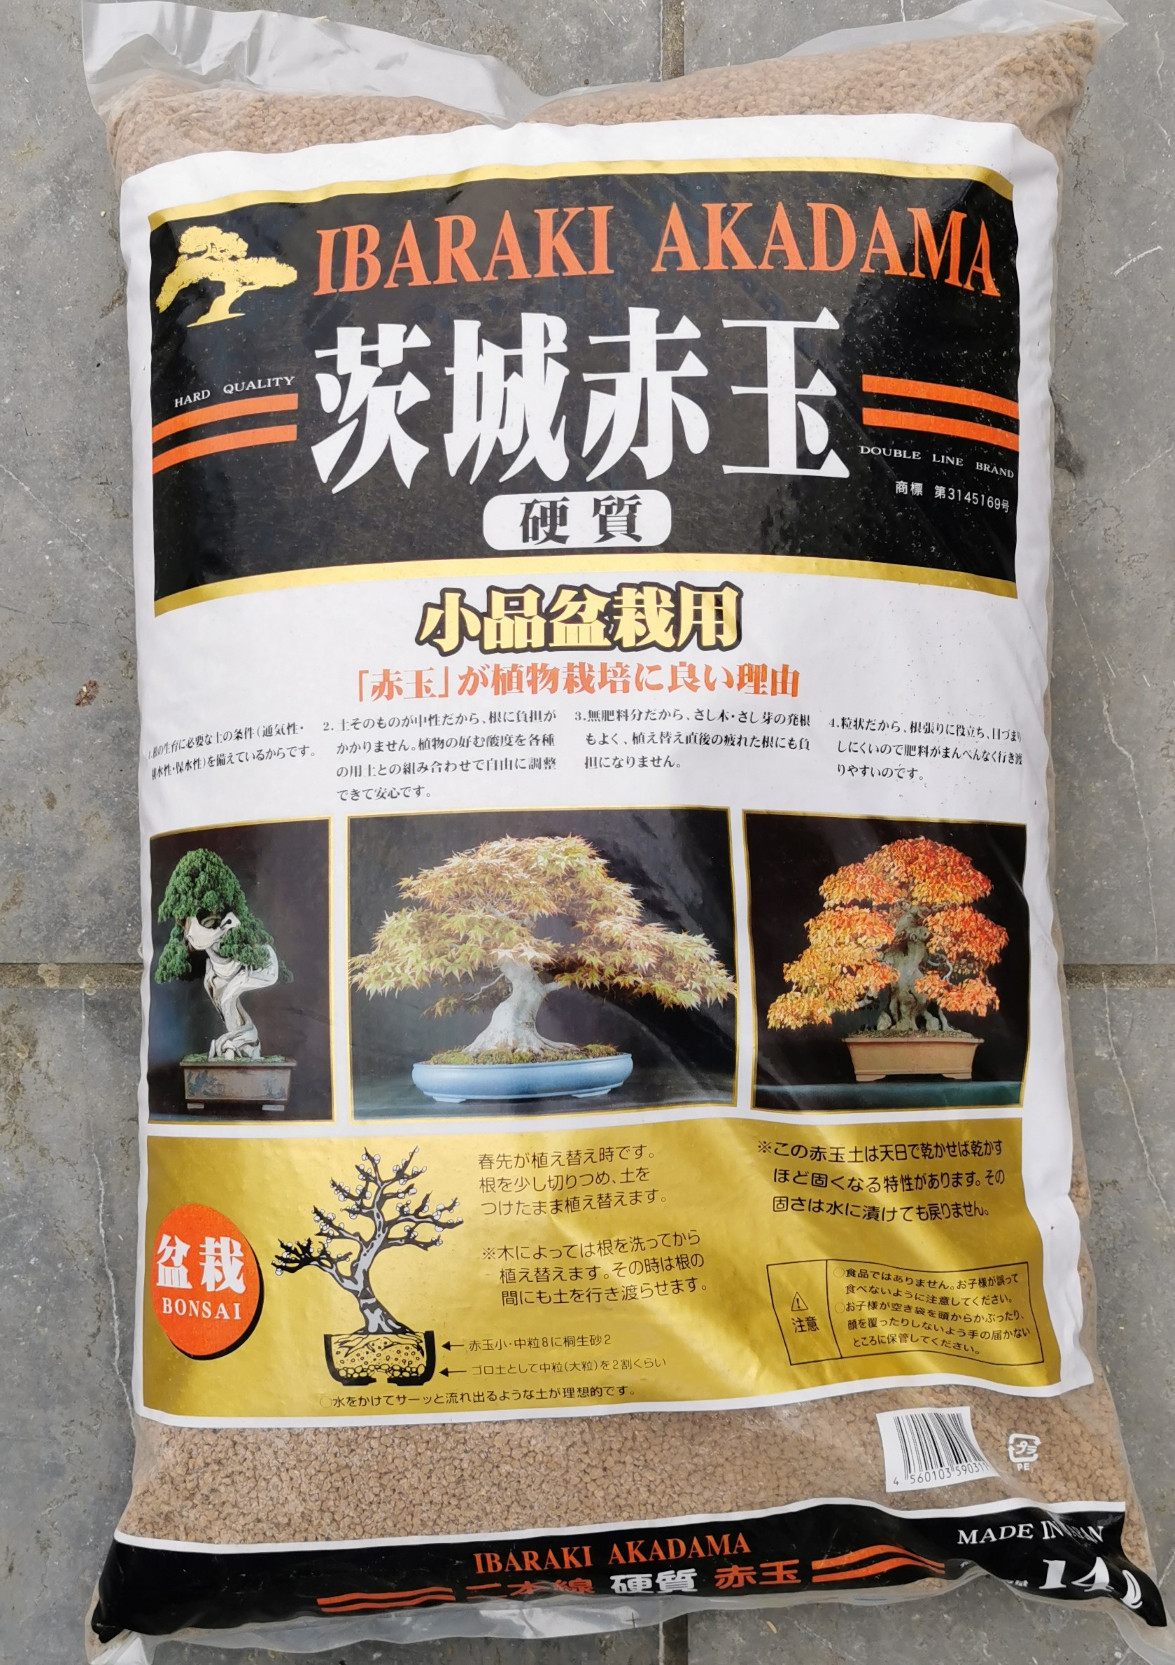 Akadama pour bonsai shohin et mame, Extra quality granulométrie fine Ibaraki